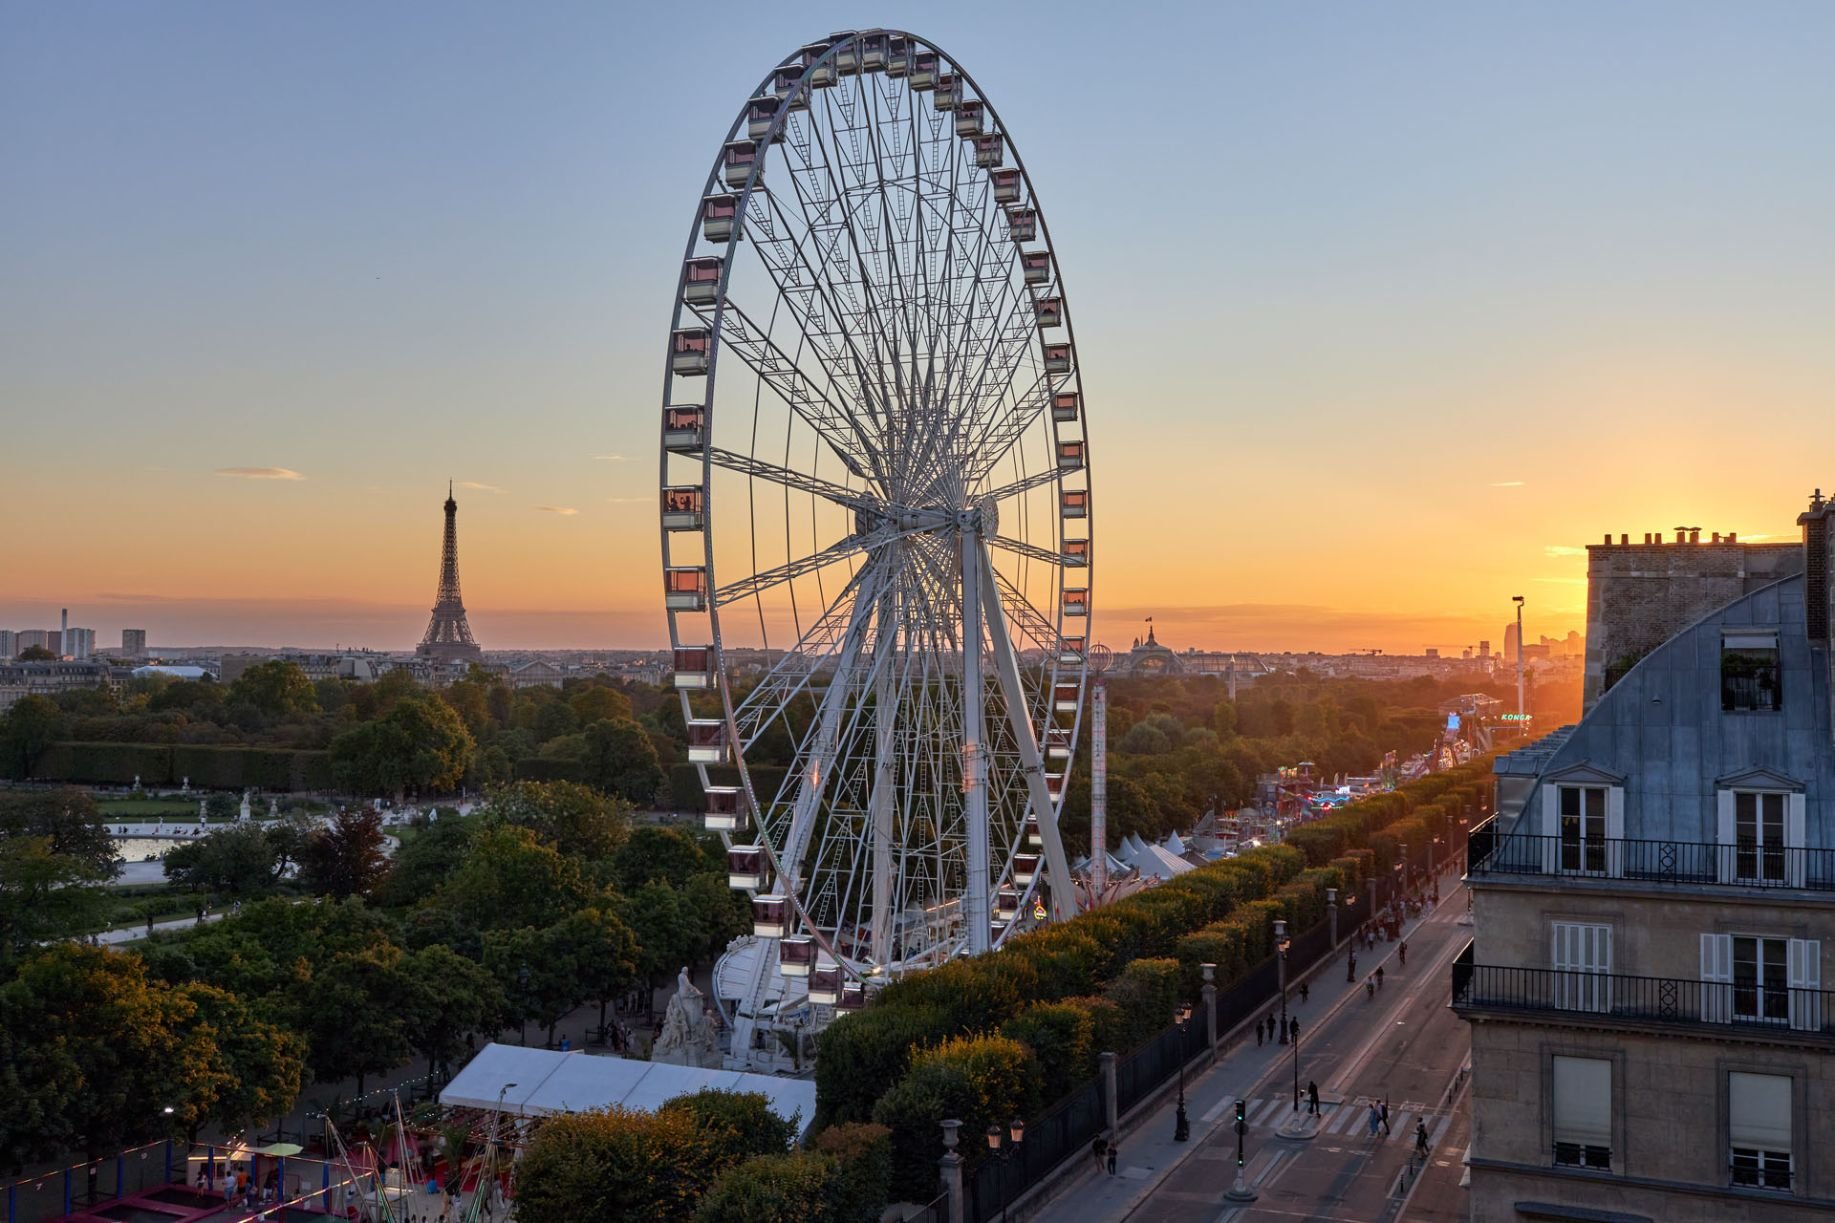 Hotel Regina Louvre Paris - Eiffel Tower View - The Most Perfect View (8).jpg